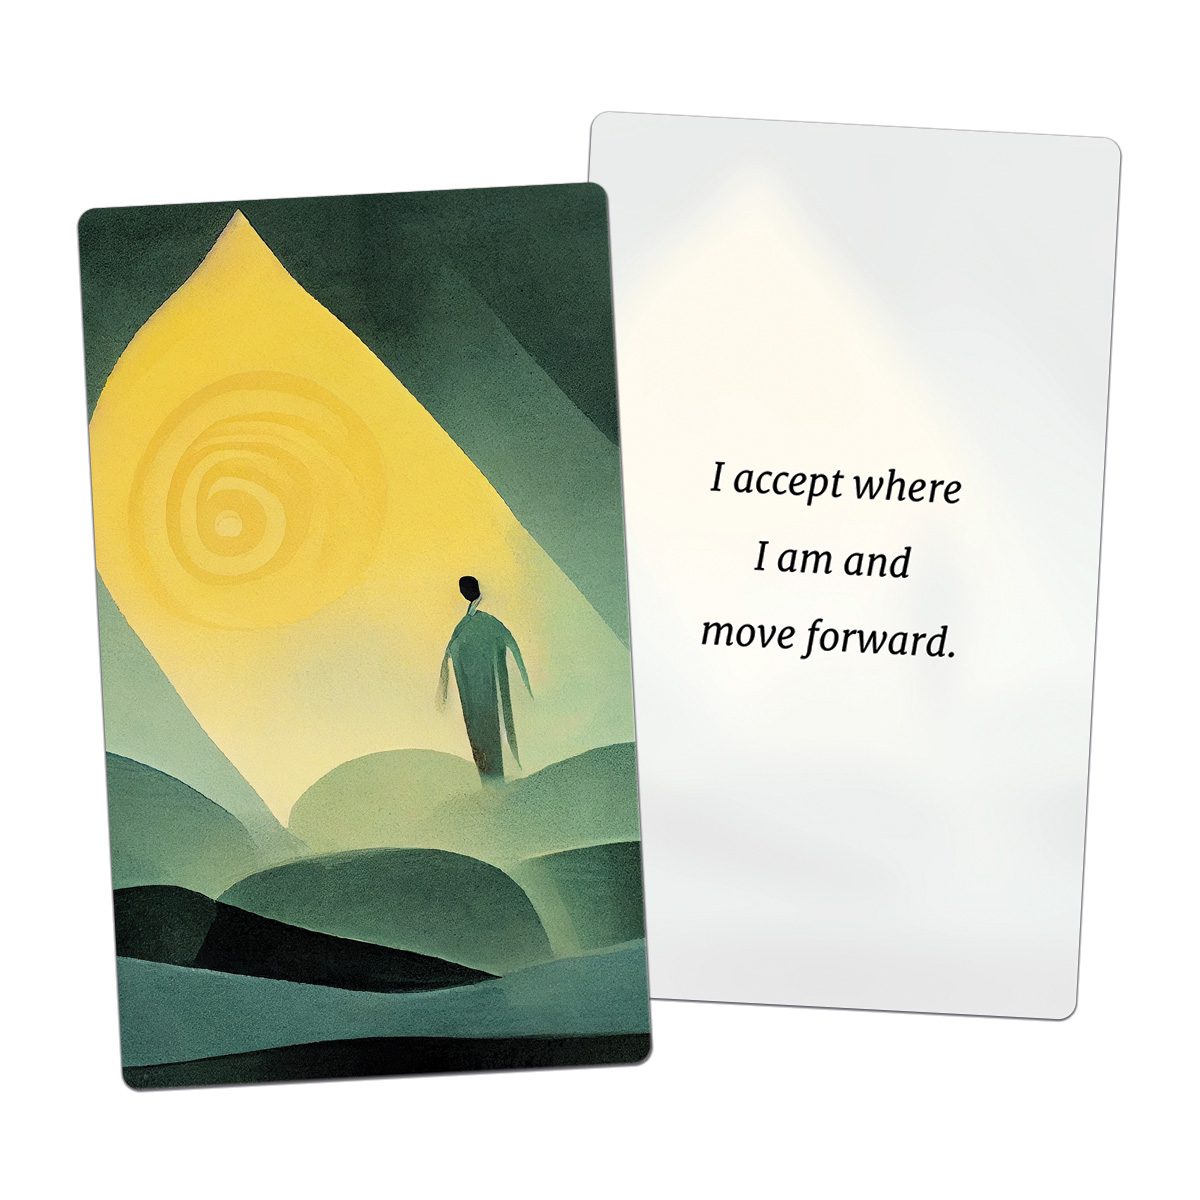 I accept where I am and move forward. (AFFIRMATION CARD)